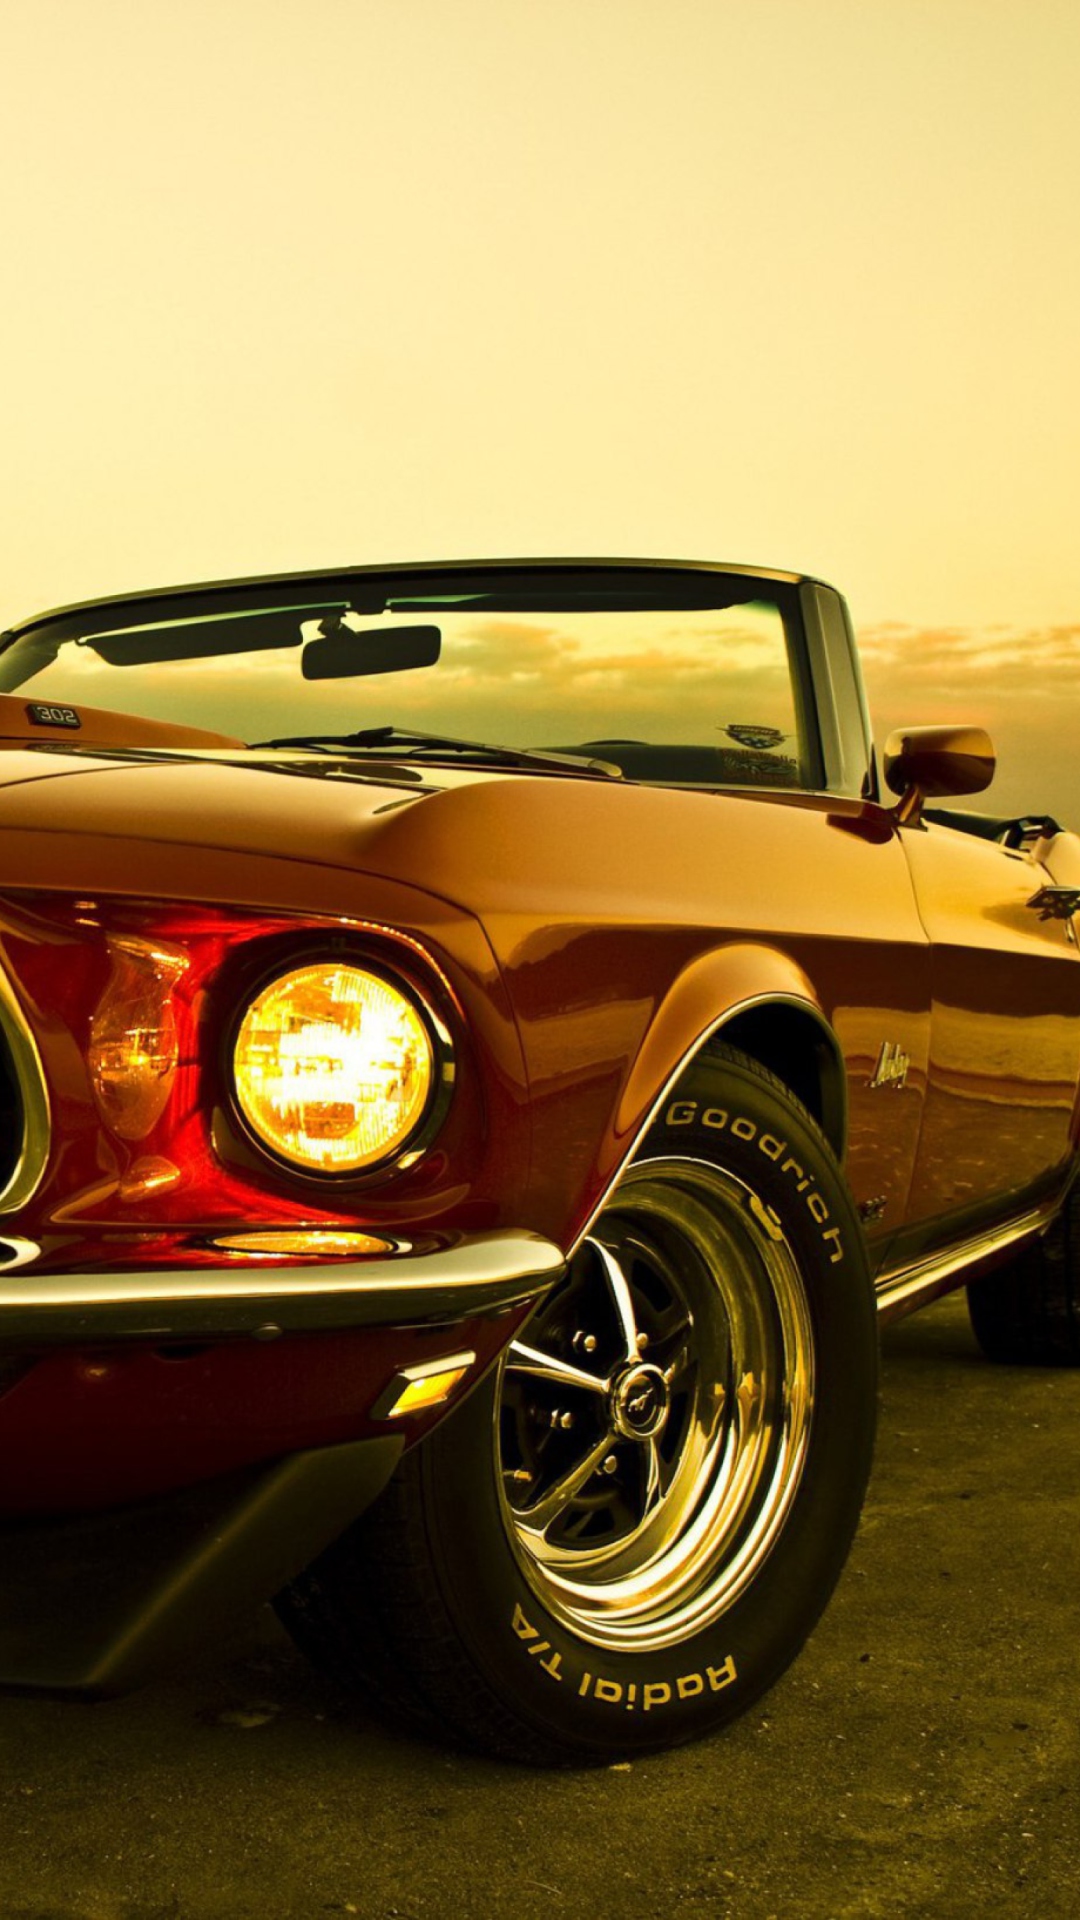 Das 1969 Ford Mustang Wallpaper 1080x1920